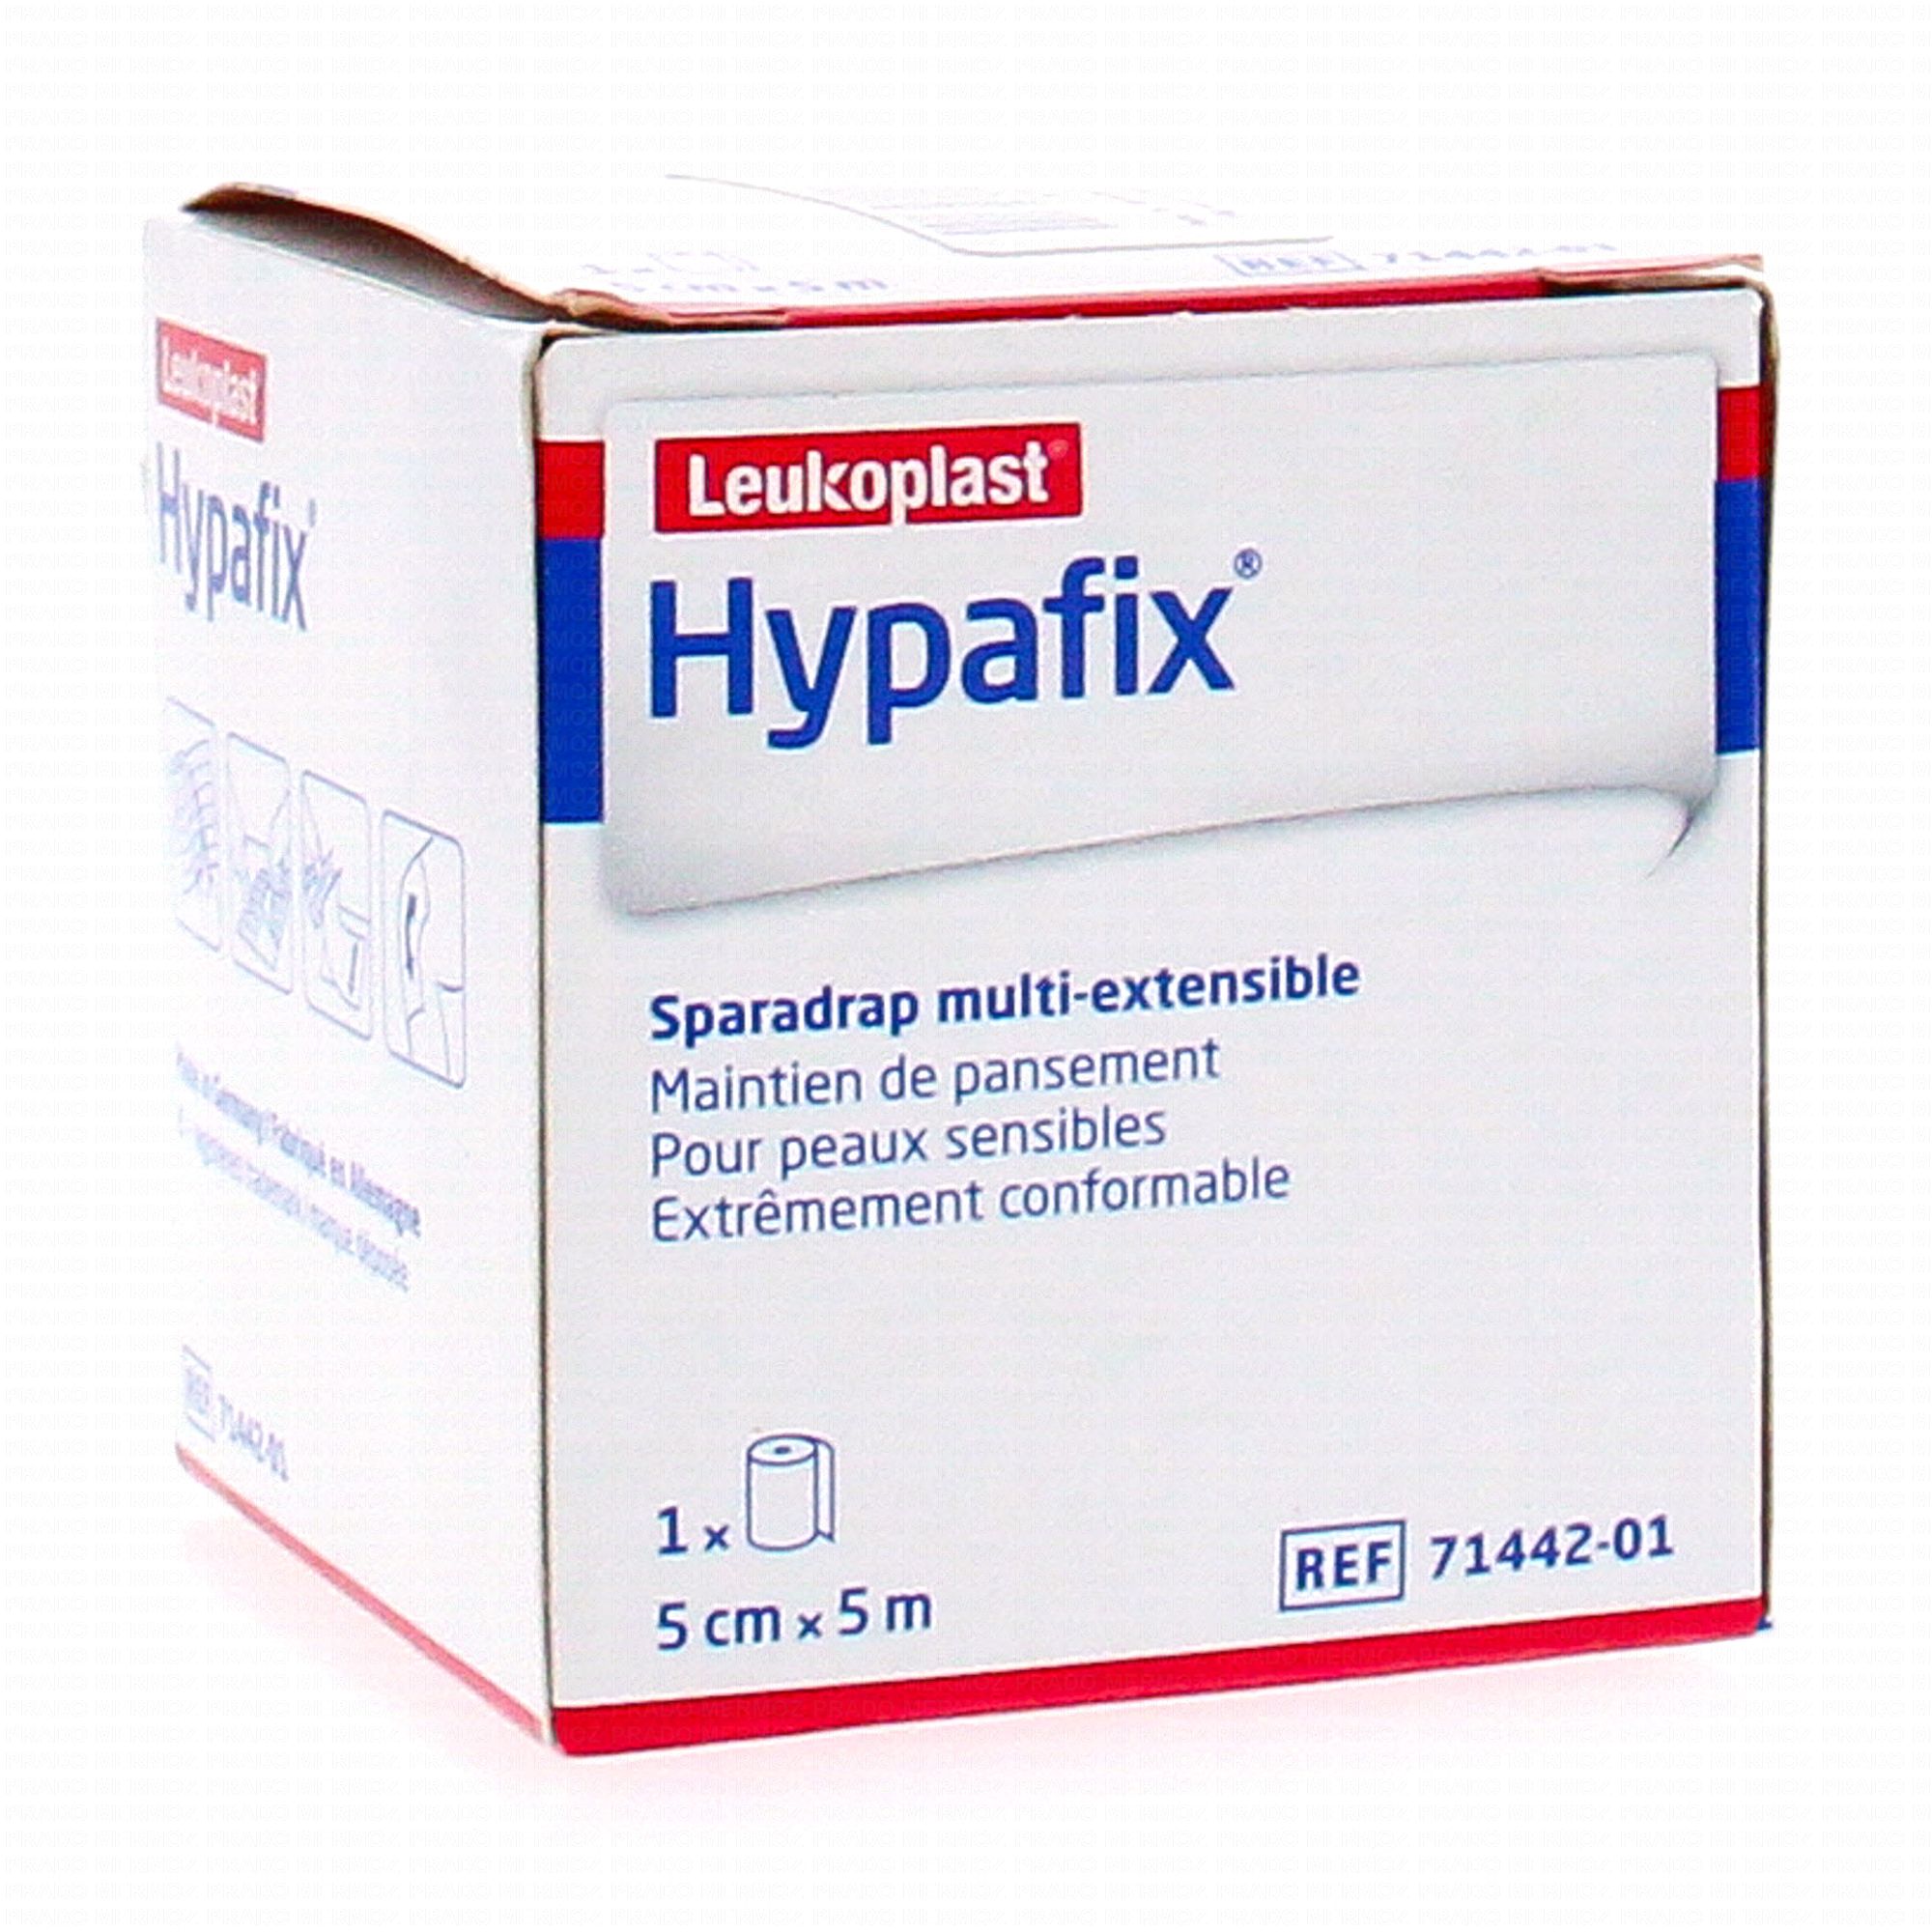 Sparadrap non-tissé multi-extensible Hypafix